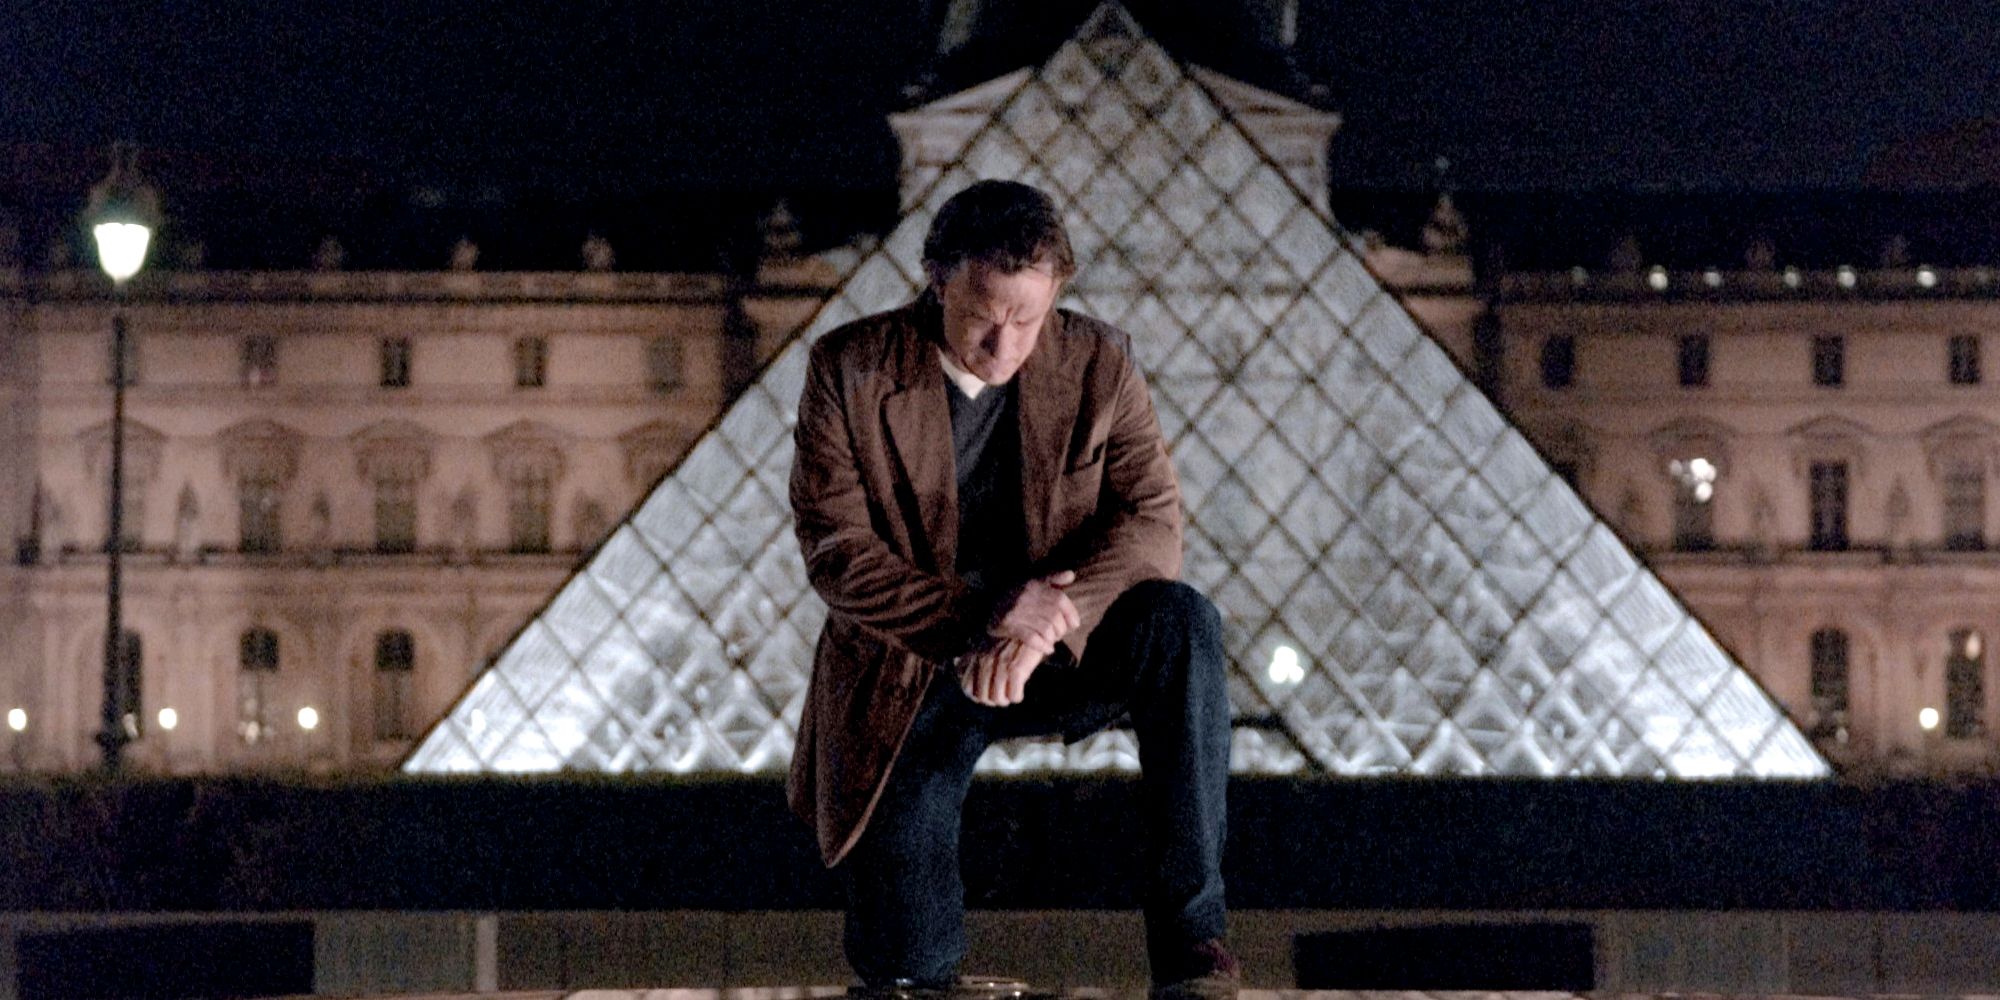 Langdon kneels in front of the Louvre in The Da Vinci Code